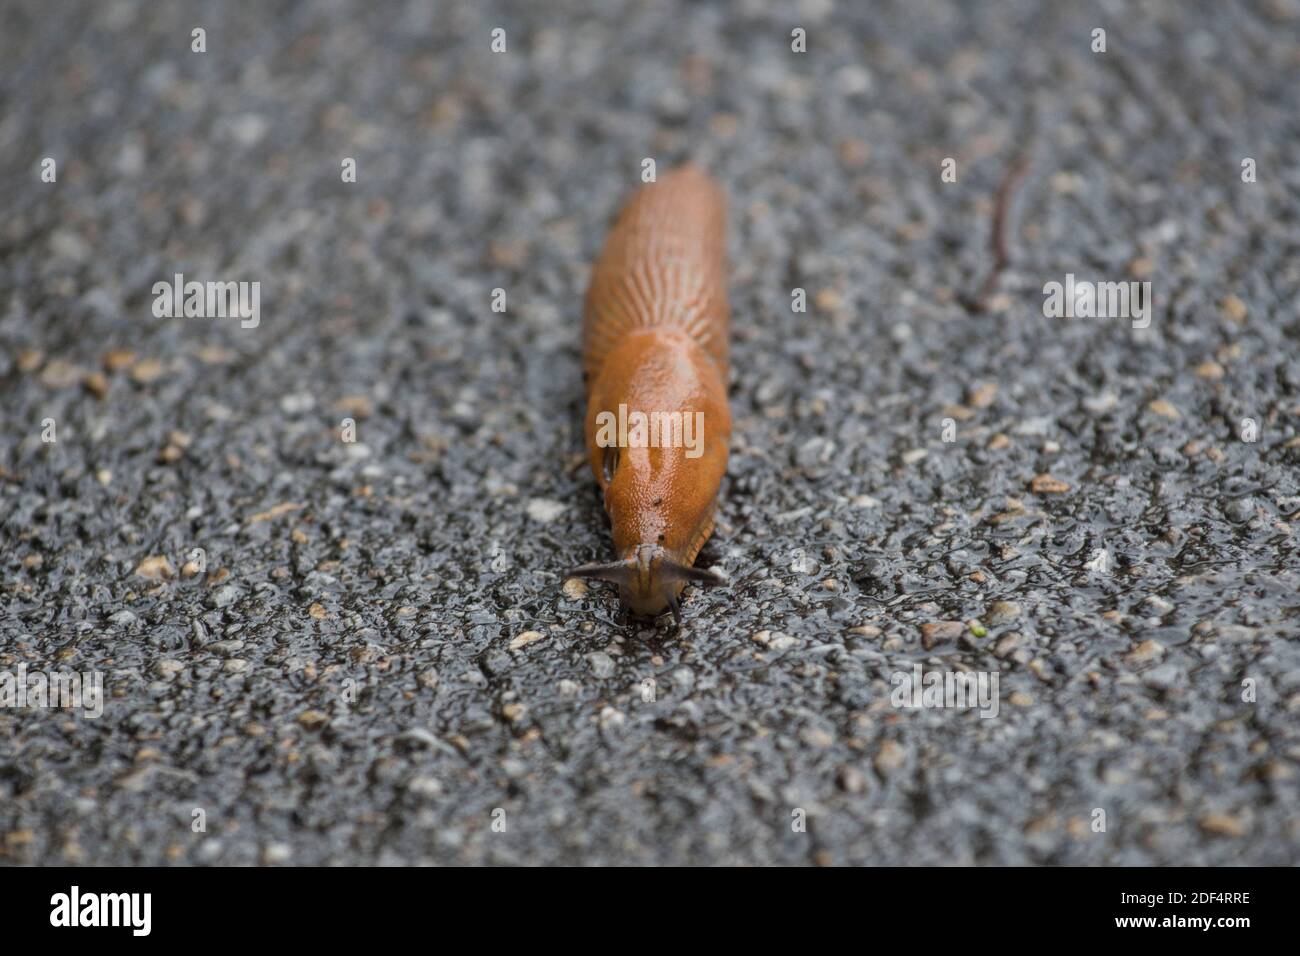 a brown spanish slug on the black asphalt after rain Stock Photo